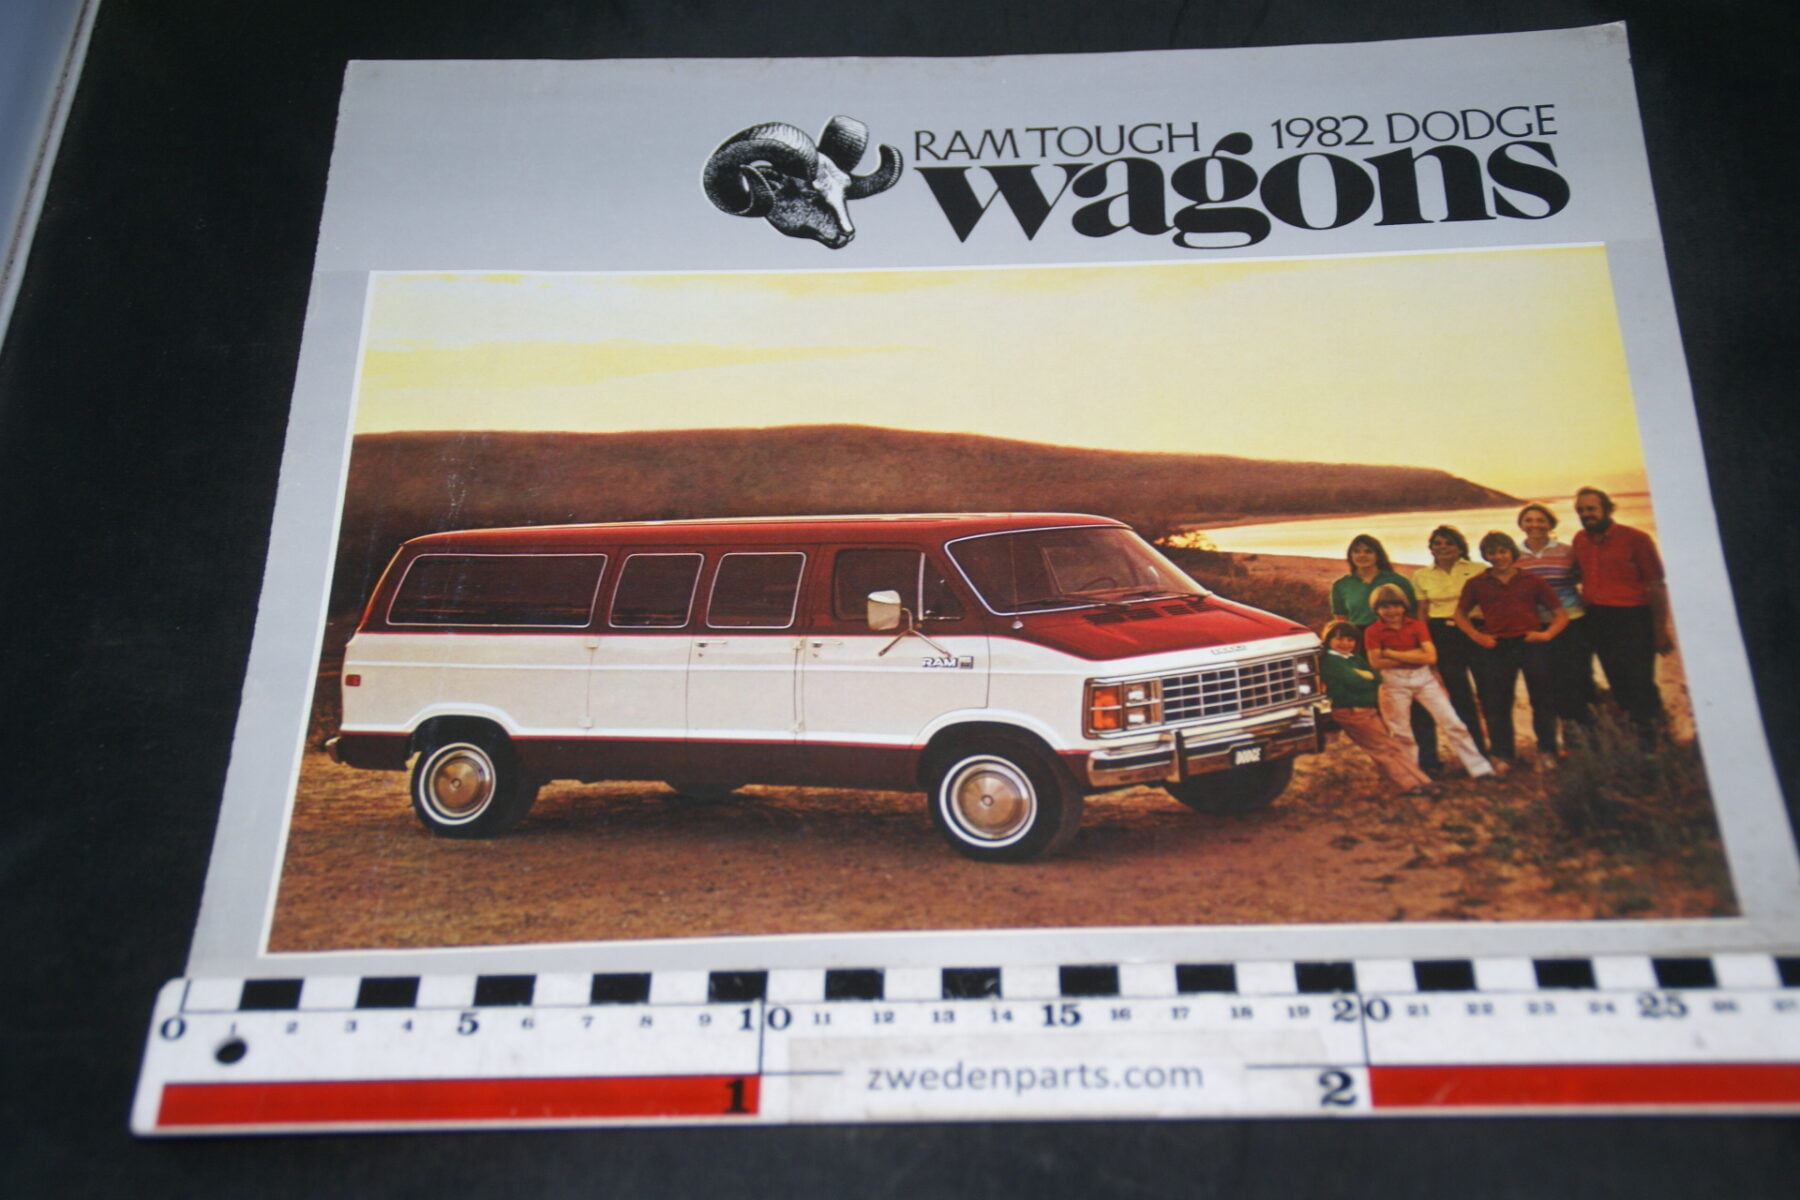 DSC04909 1982 Dodge Wagons brochure